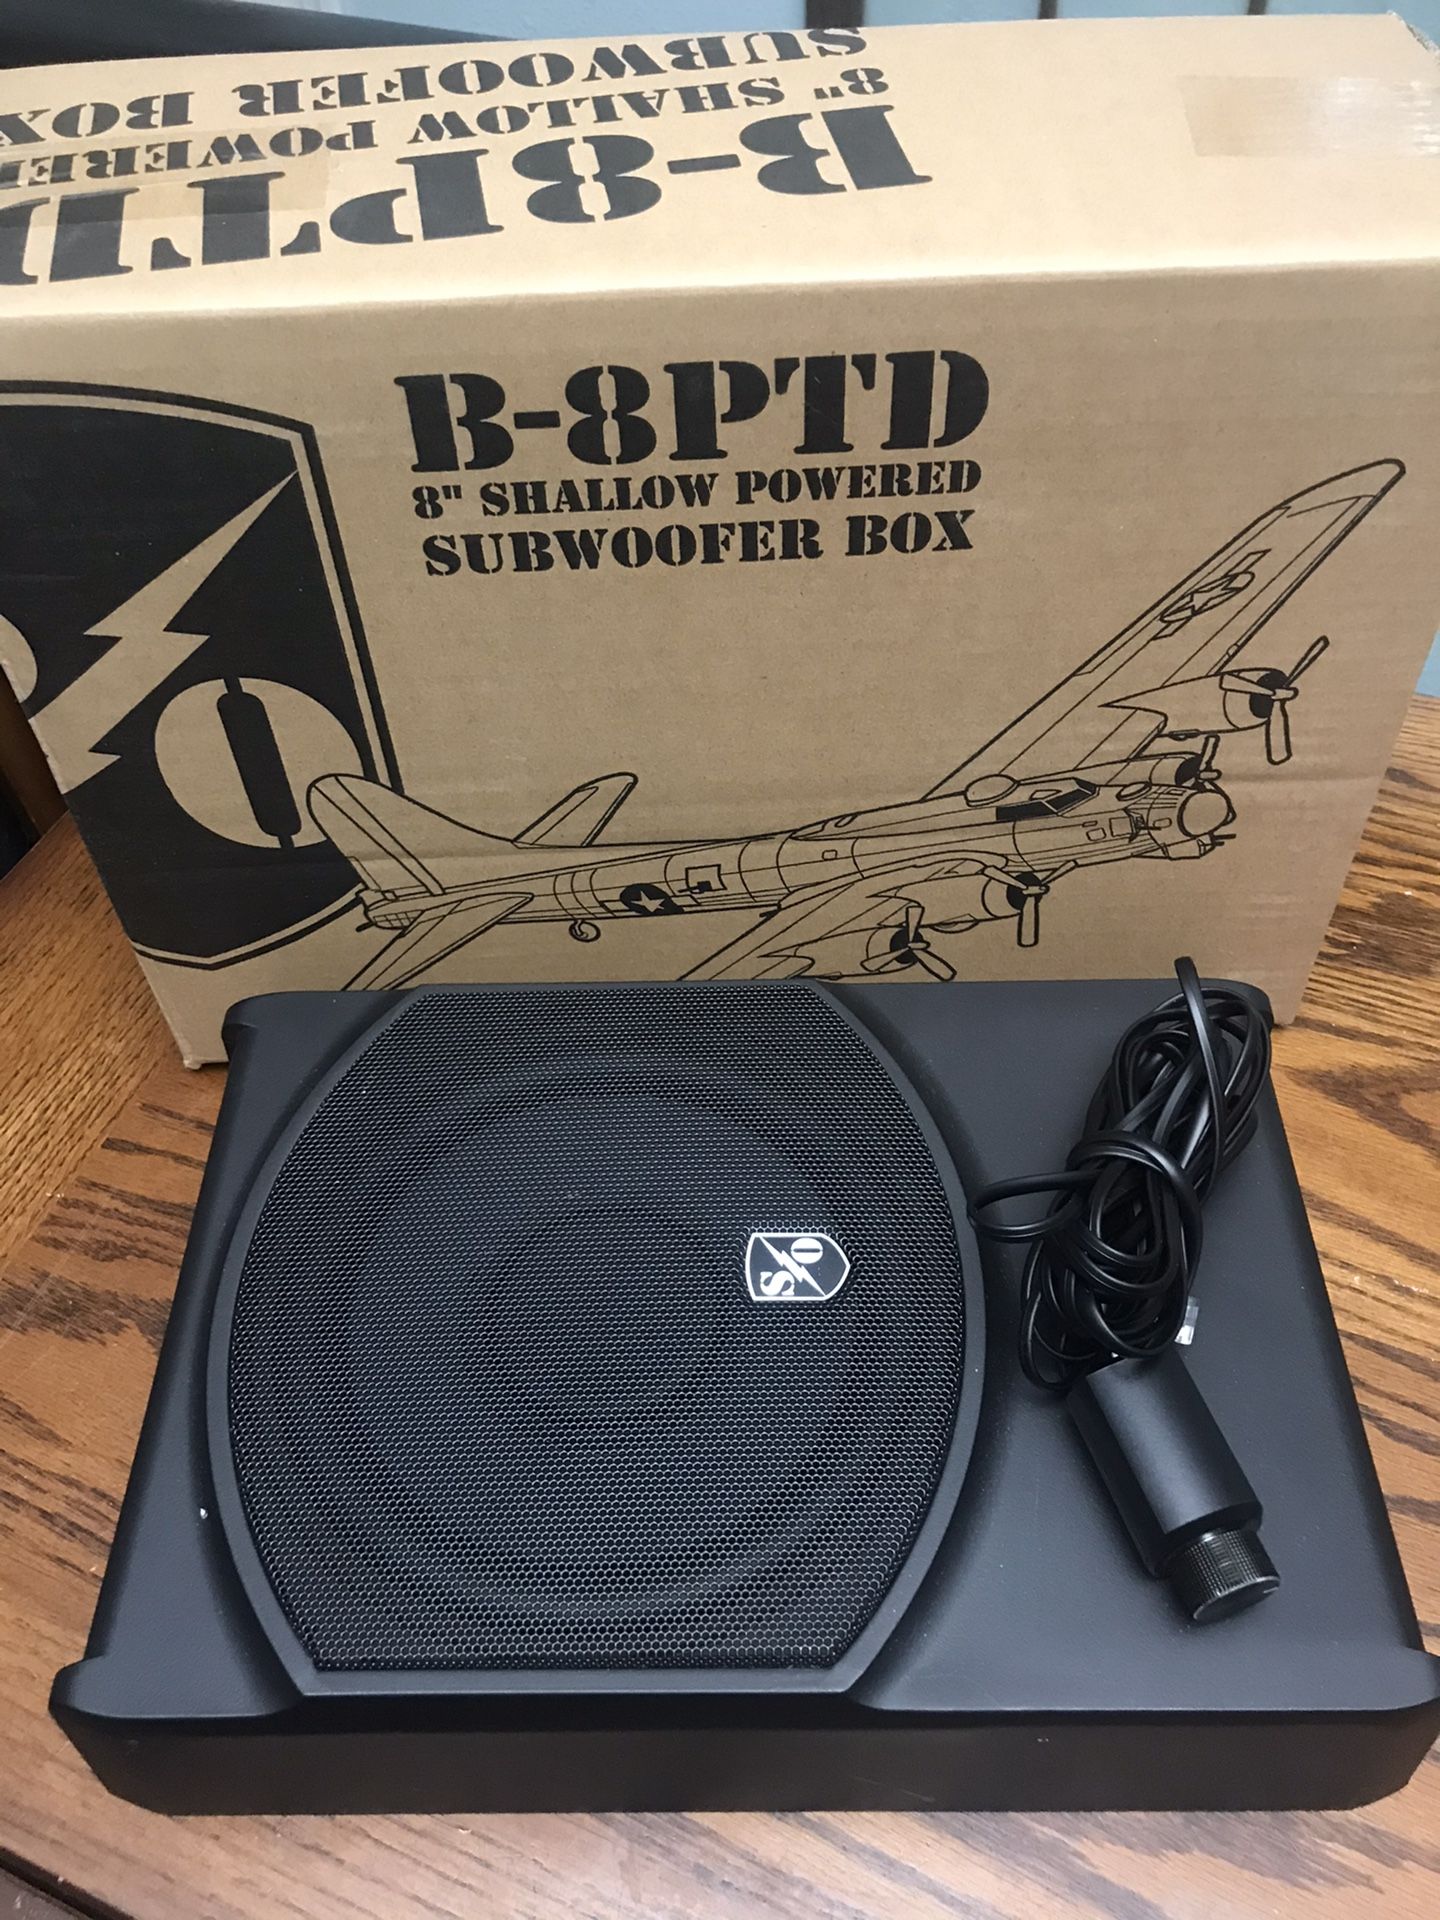 Sound Ordnance B-8PTD powered subwoofer